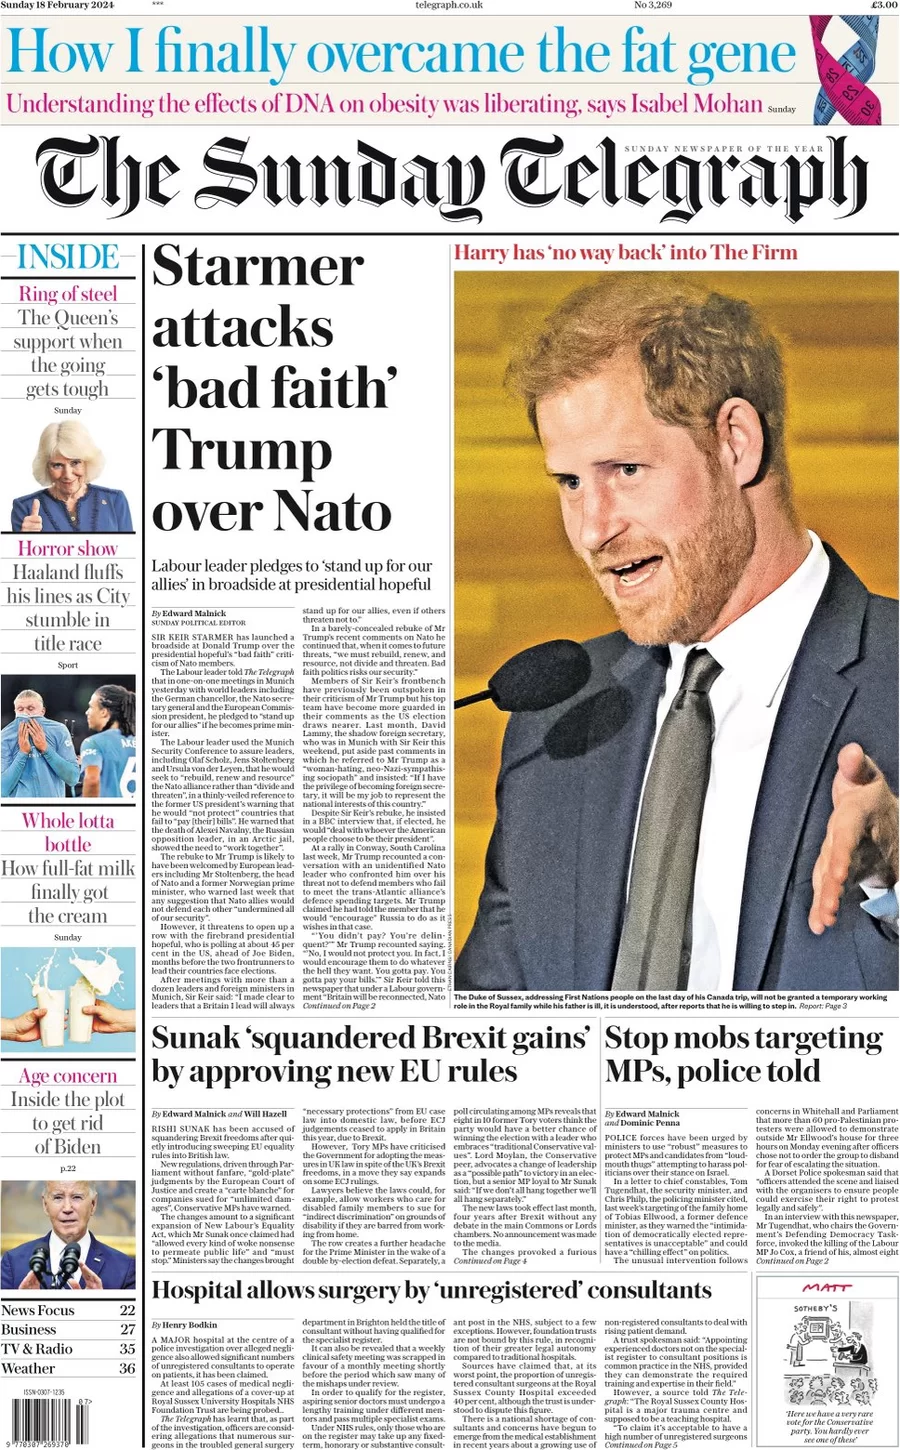 The Sunday Telegraph - ‘Starmer attacks ‘bad faith’ Trump over Nato’